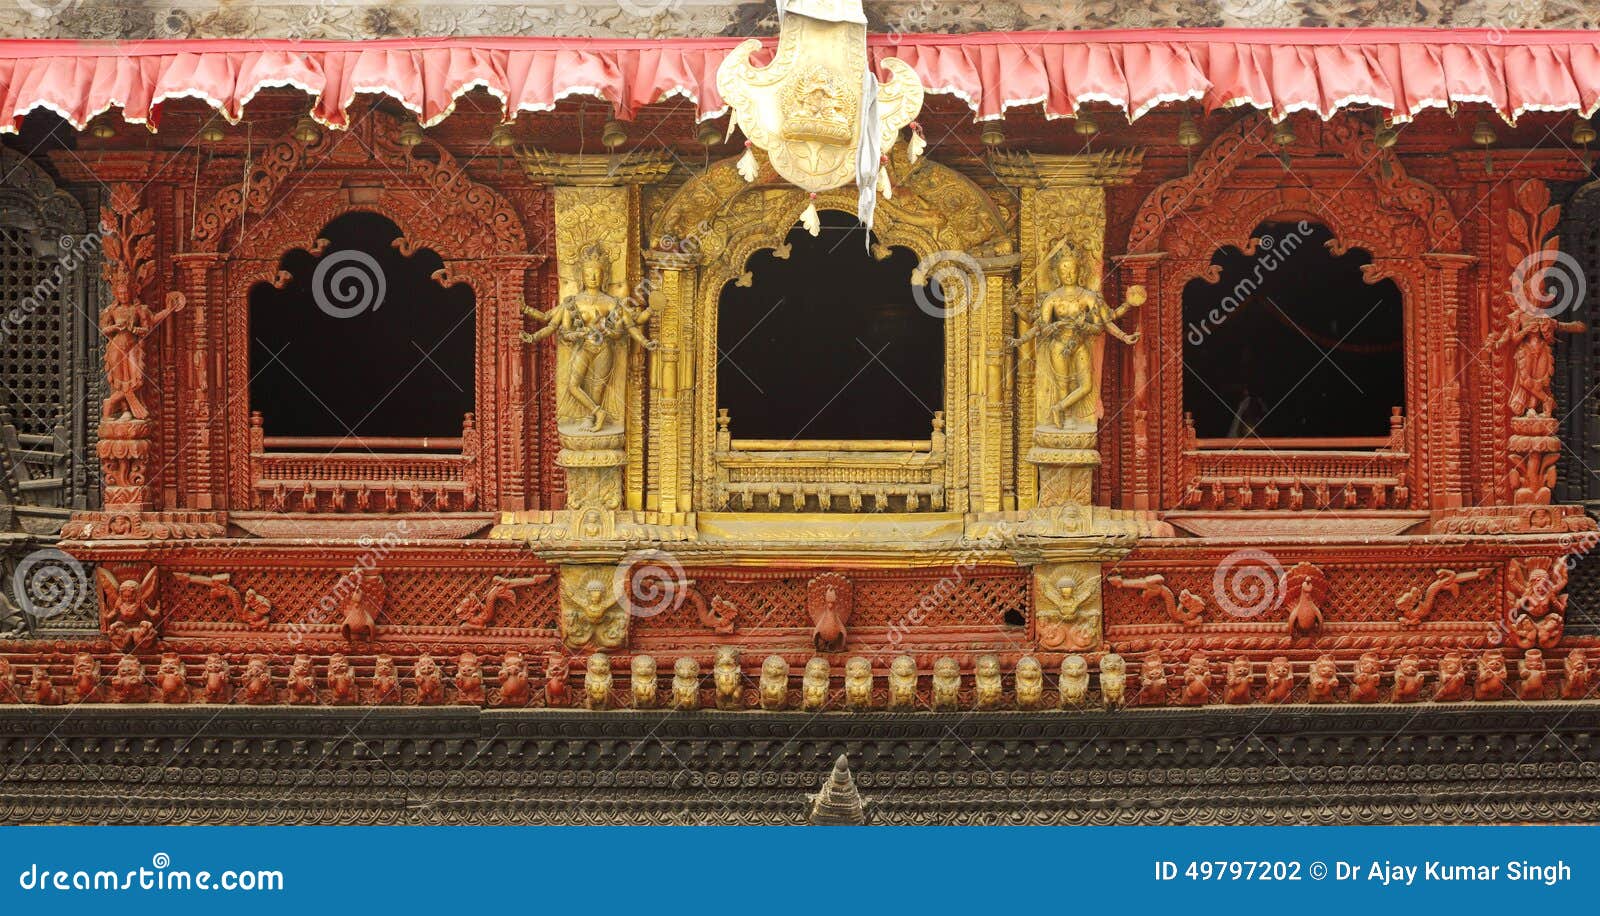 intricate  on the windows of hanuman dhoka durbar